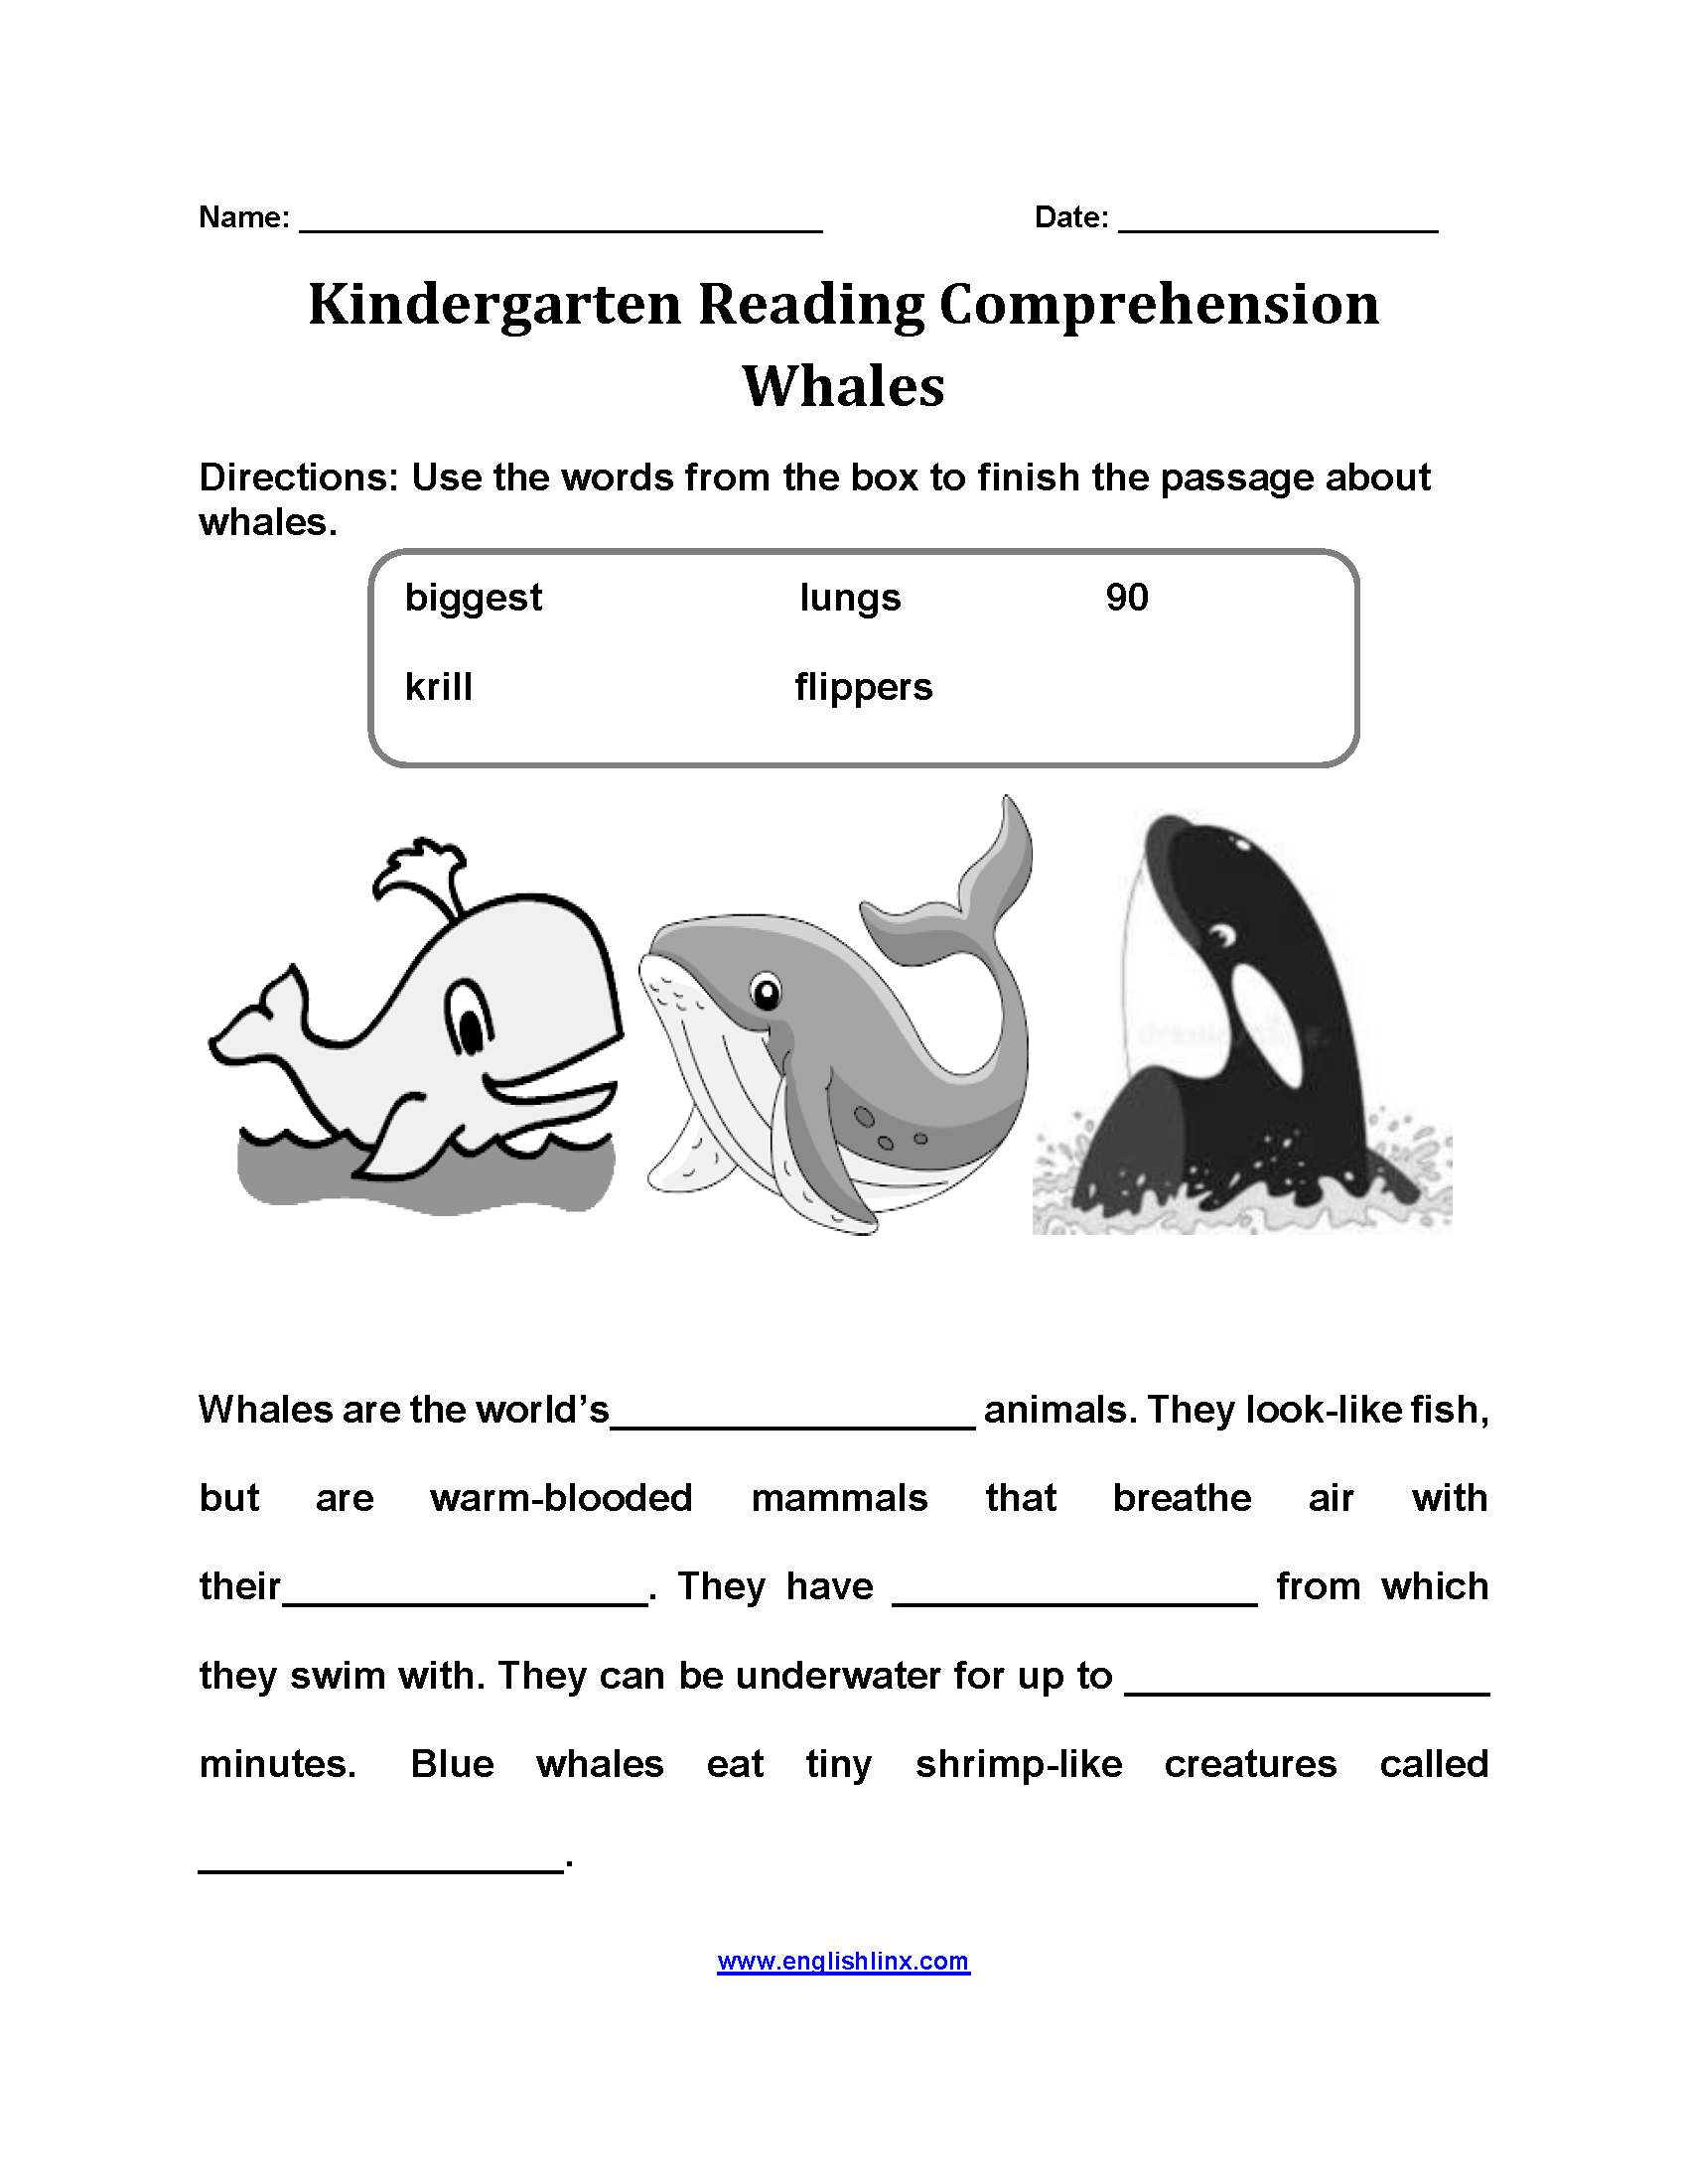 The Whales Kindergarten Reading Comprehension Worksheets